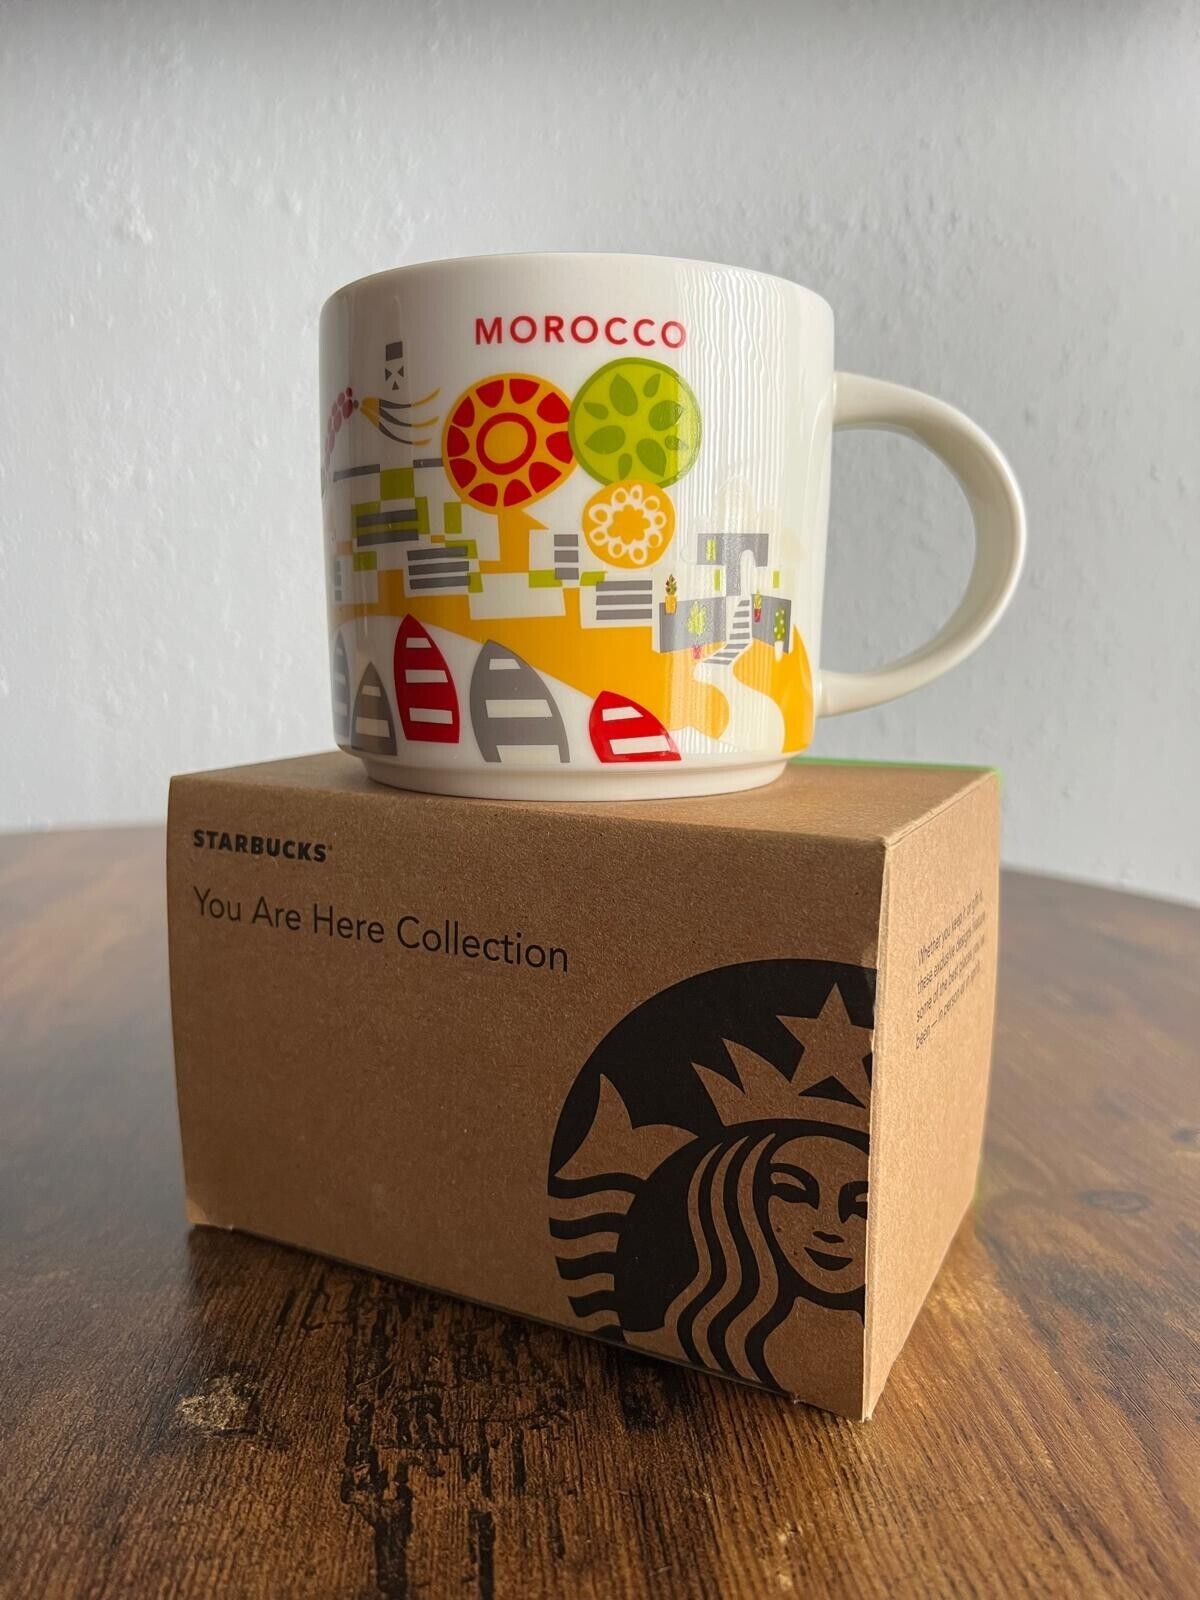 Starbucks You Are Here Collection MOROCCO Ceramic Coffee Mug New, 